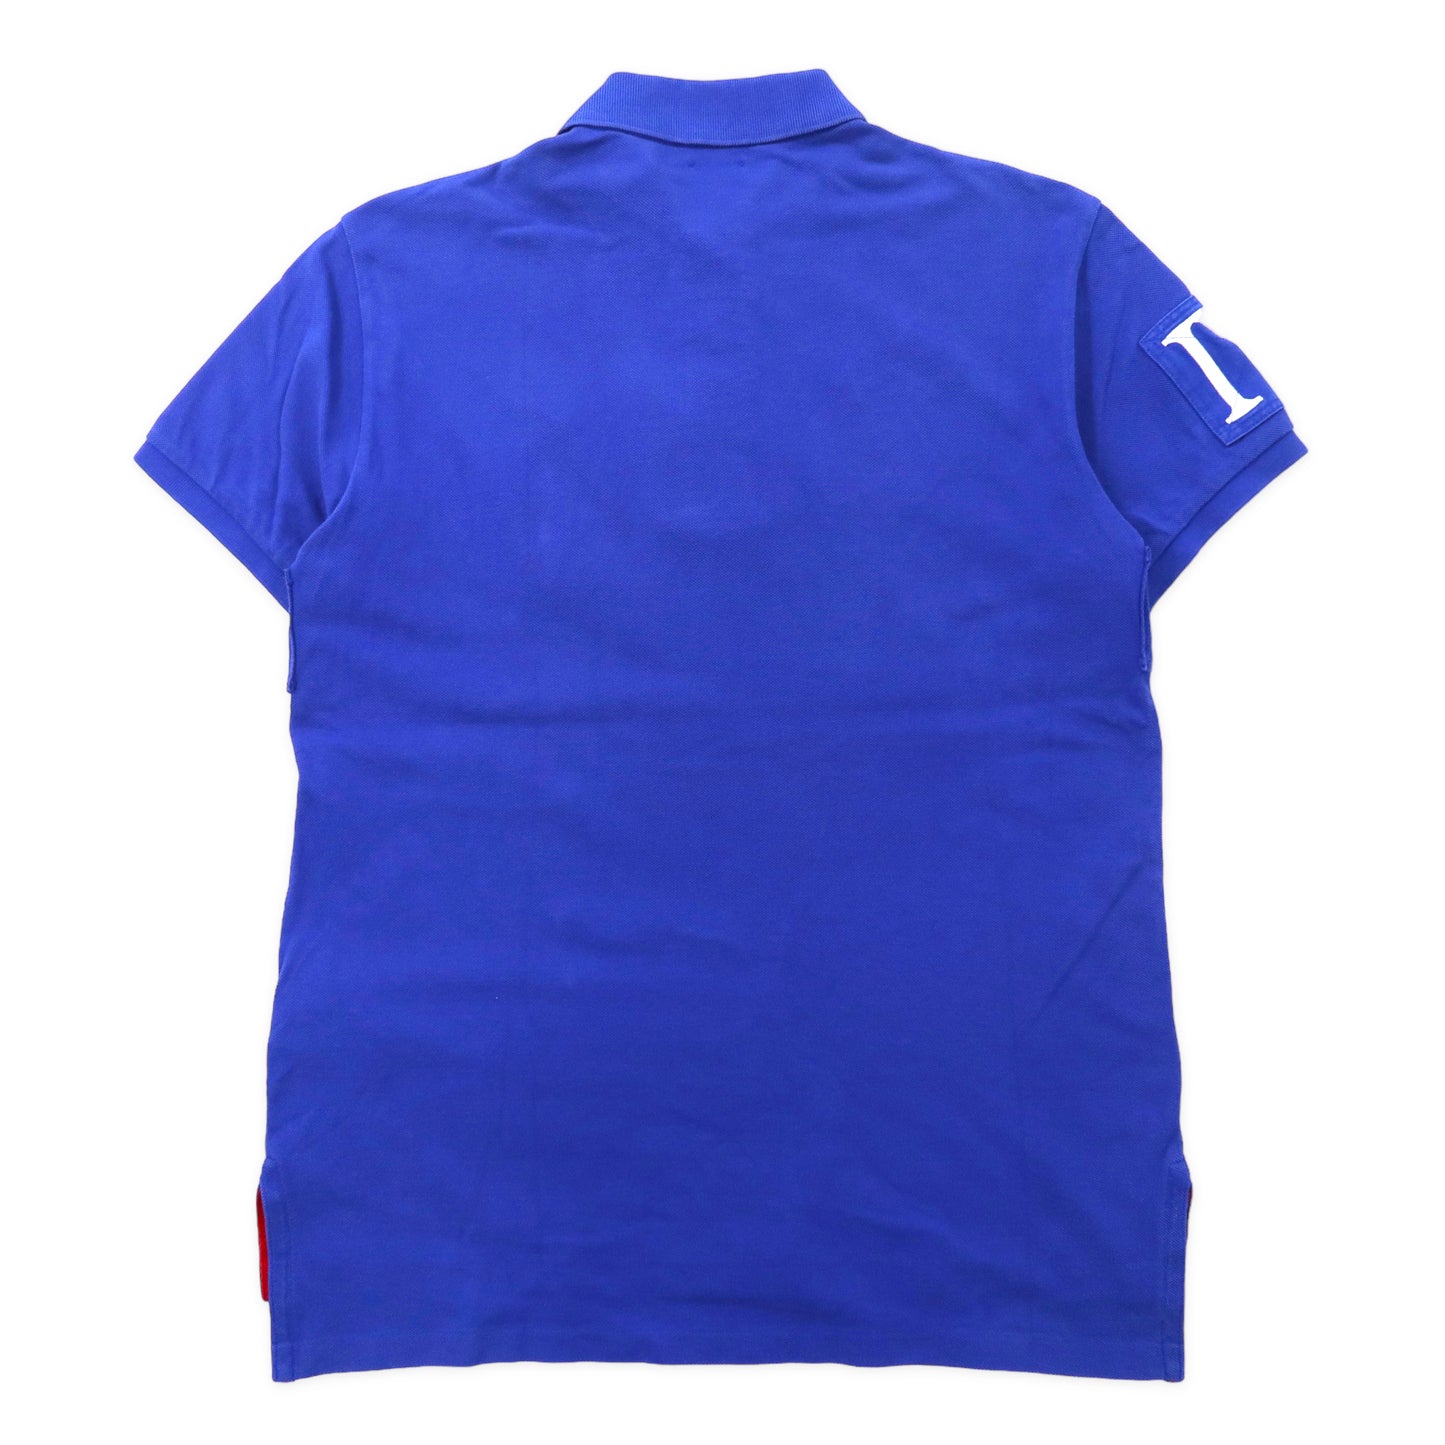 POLO RALPH LAUREN ビッグポニー ポロシャツ 170 ブルー コットン エンブレムロゴ刺繍 R.L.COUNTY RIDERS & JOCKEY CLUB